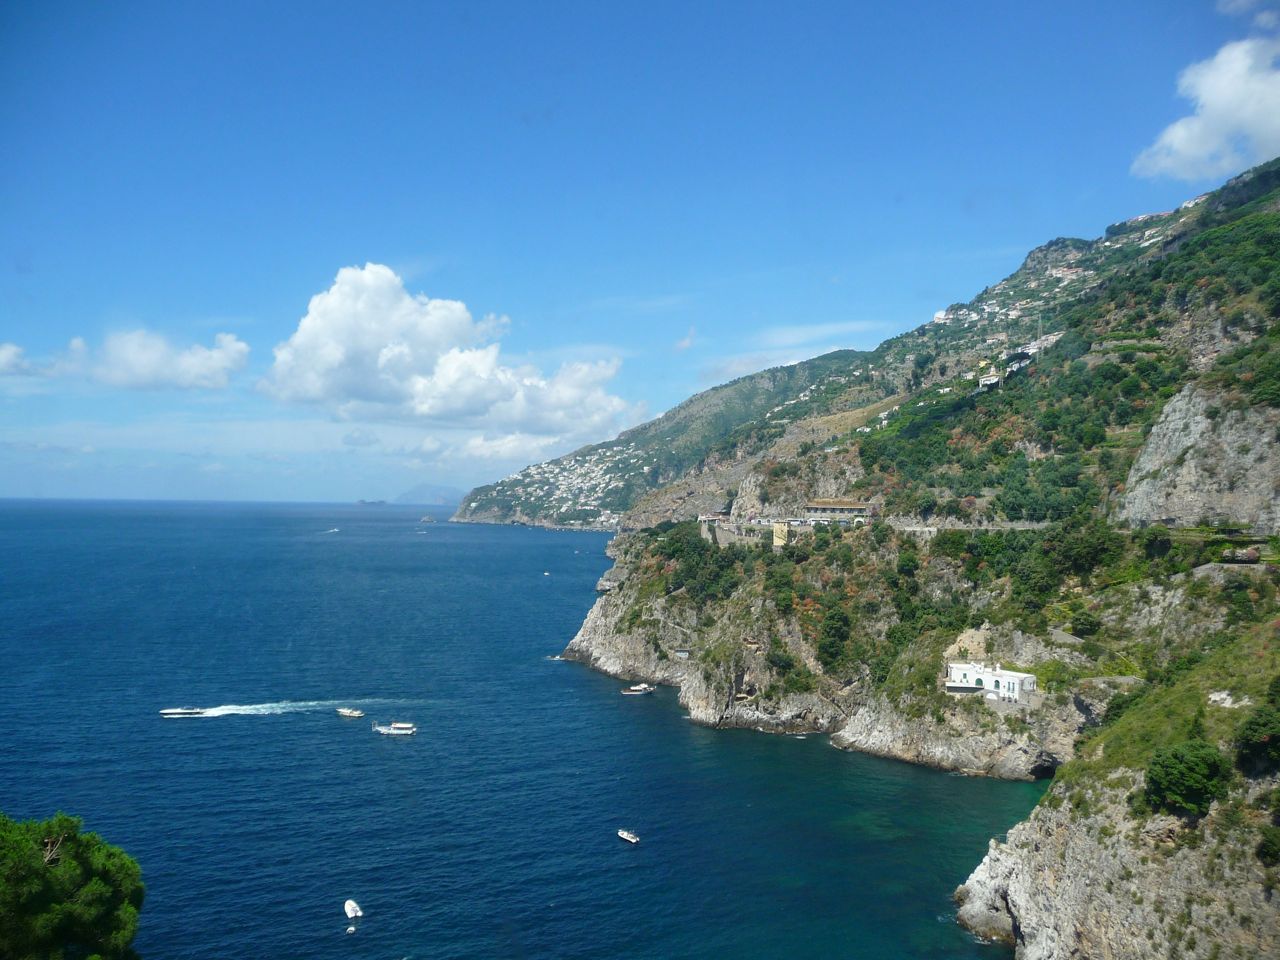 A Day on The Amalfi Coast